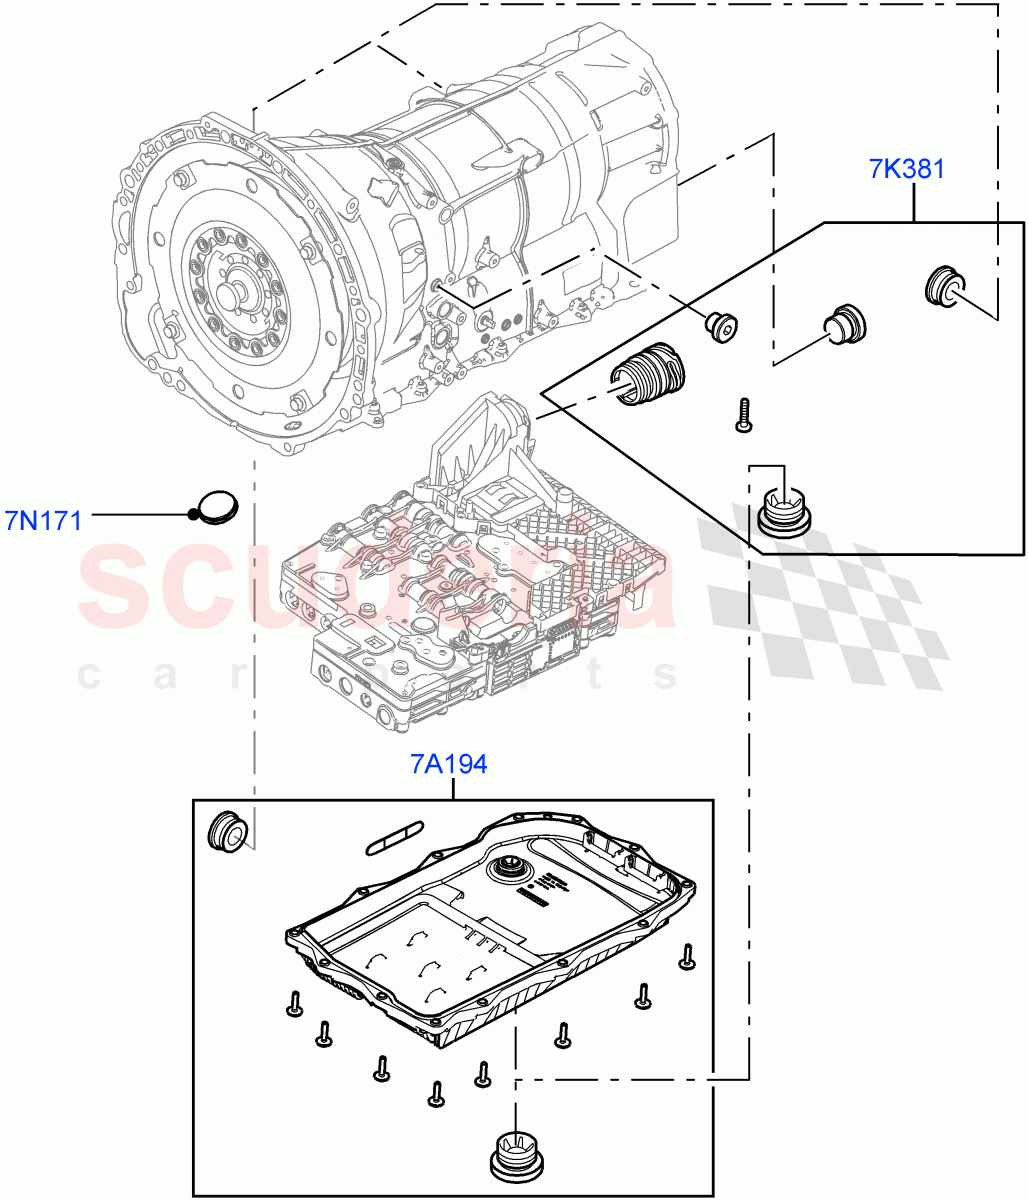 Transmission External Components(3.0L DOHC GDI SC V6 PETROL,8 Speed Auto Trans ZF 8HP70 4WD,3.0 V6 D Gen2 Twin Turbo) of Land Rover Land Rover Range Rover Velar (2017+) [3.0 I6 Turbo Diesel AJ20D6]